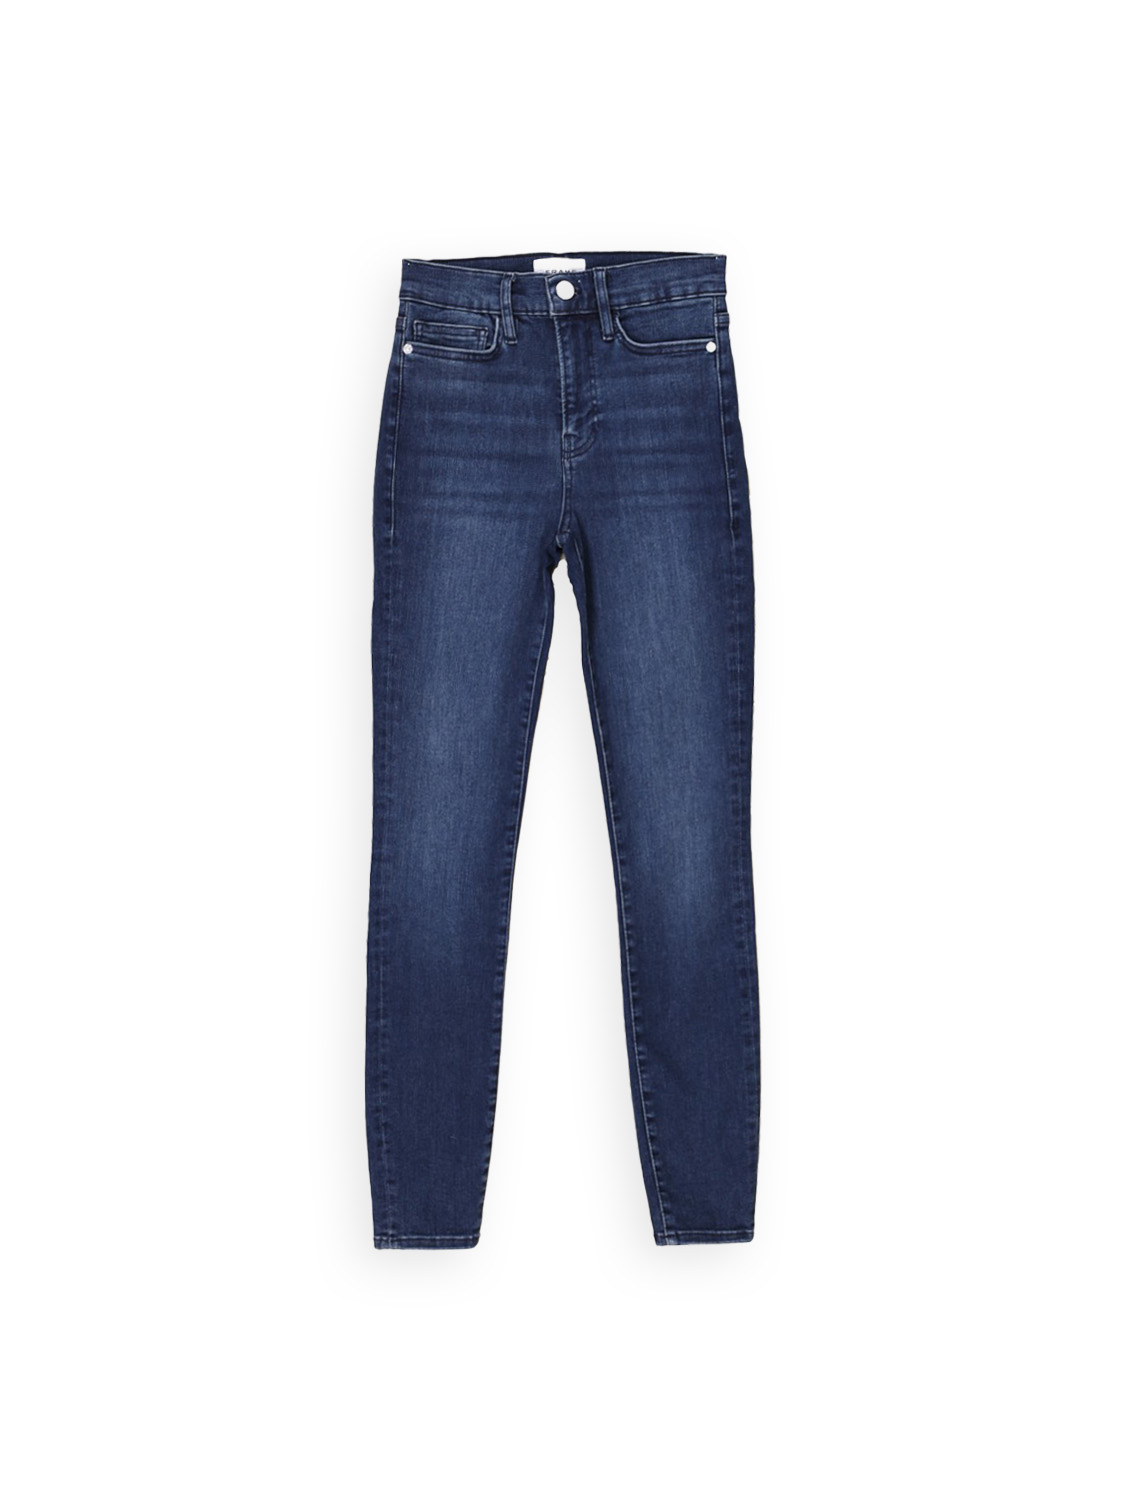 Le High - Jeans skinny stretch en coton bio  